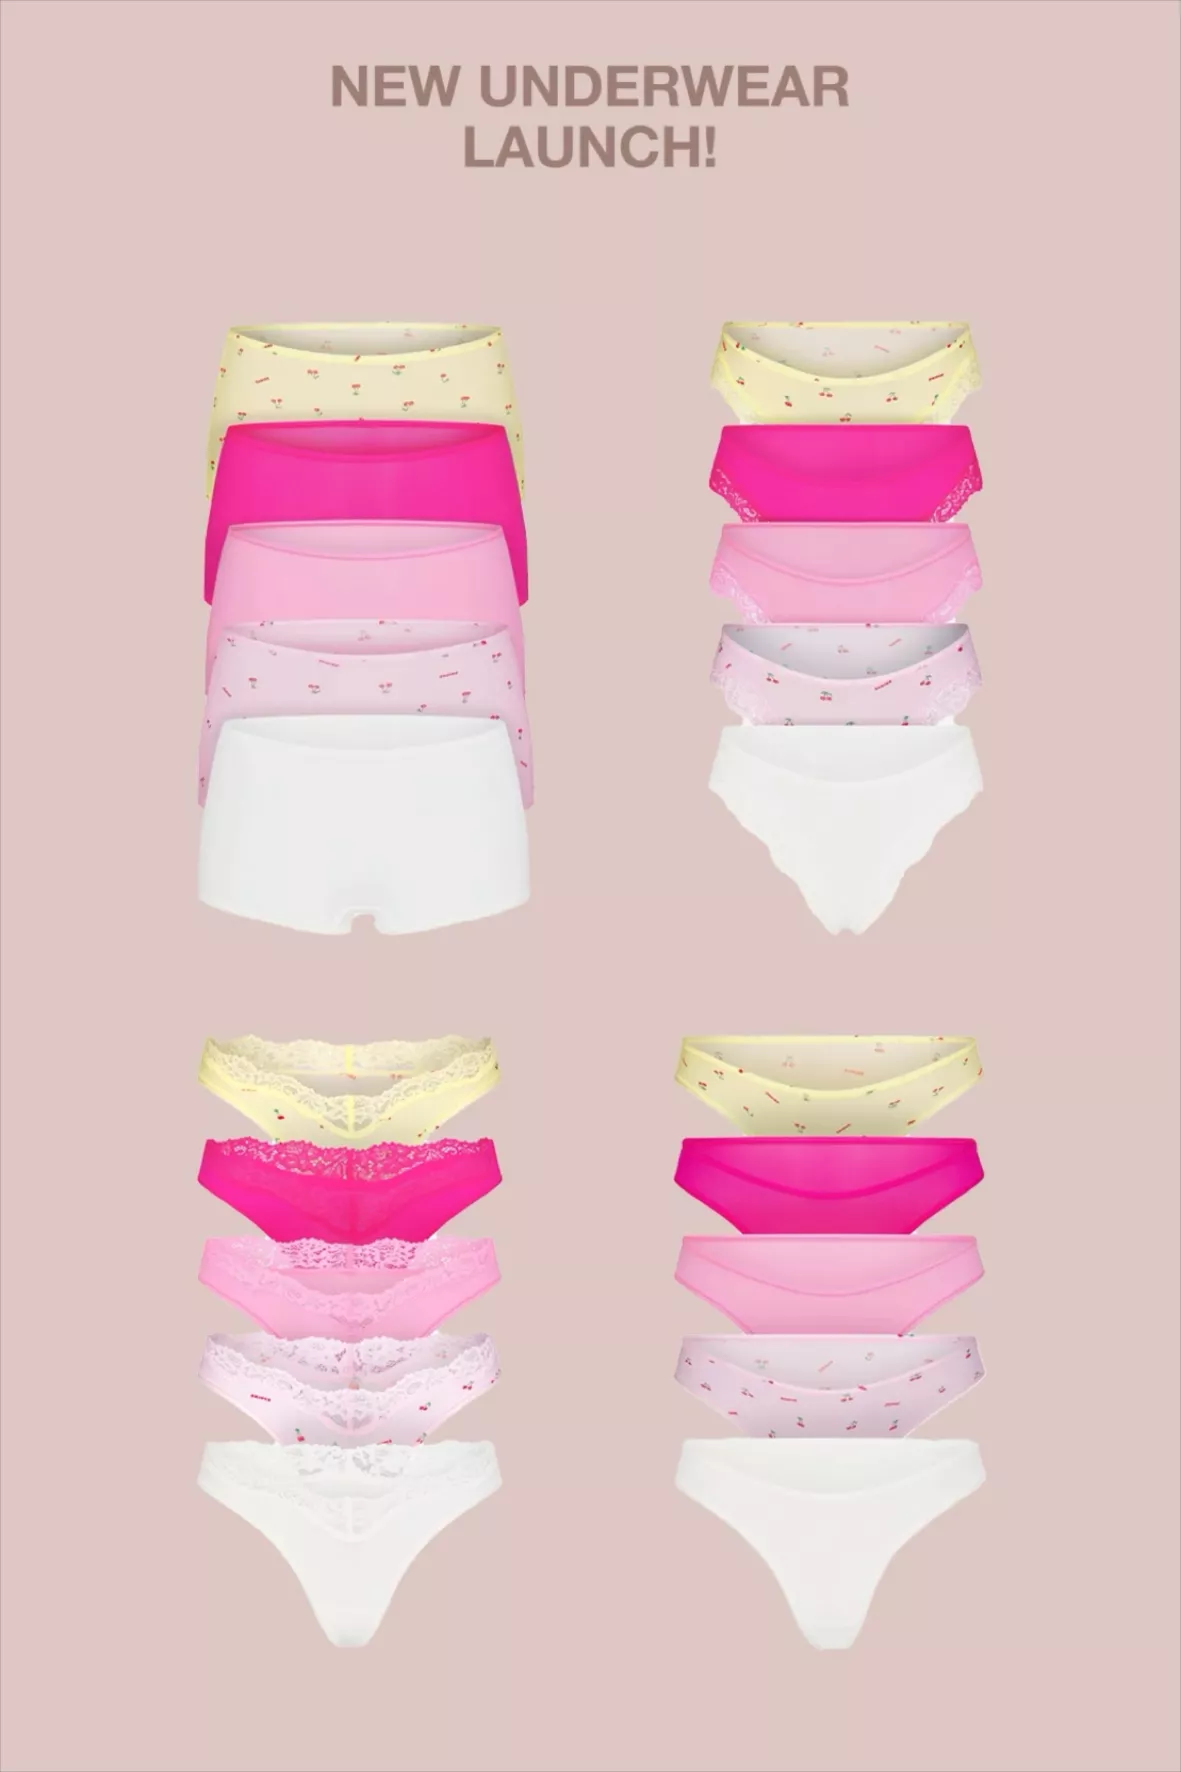 Modern female panties collection for week. Cute colorful weekly